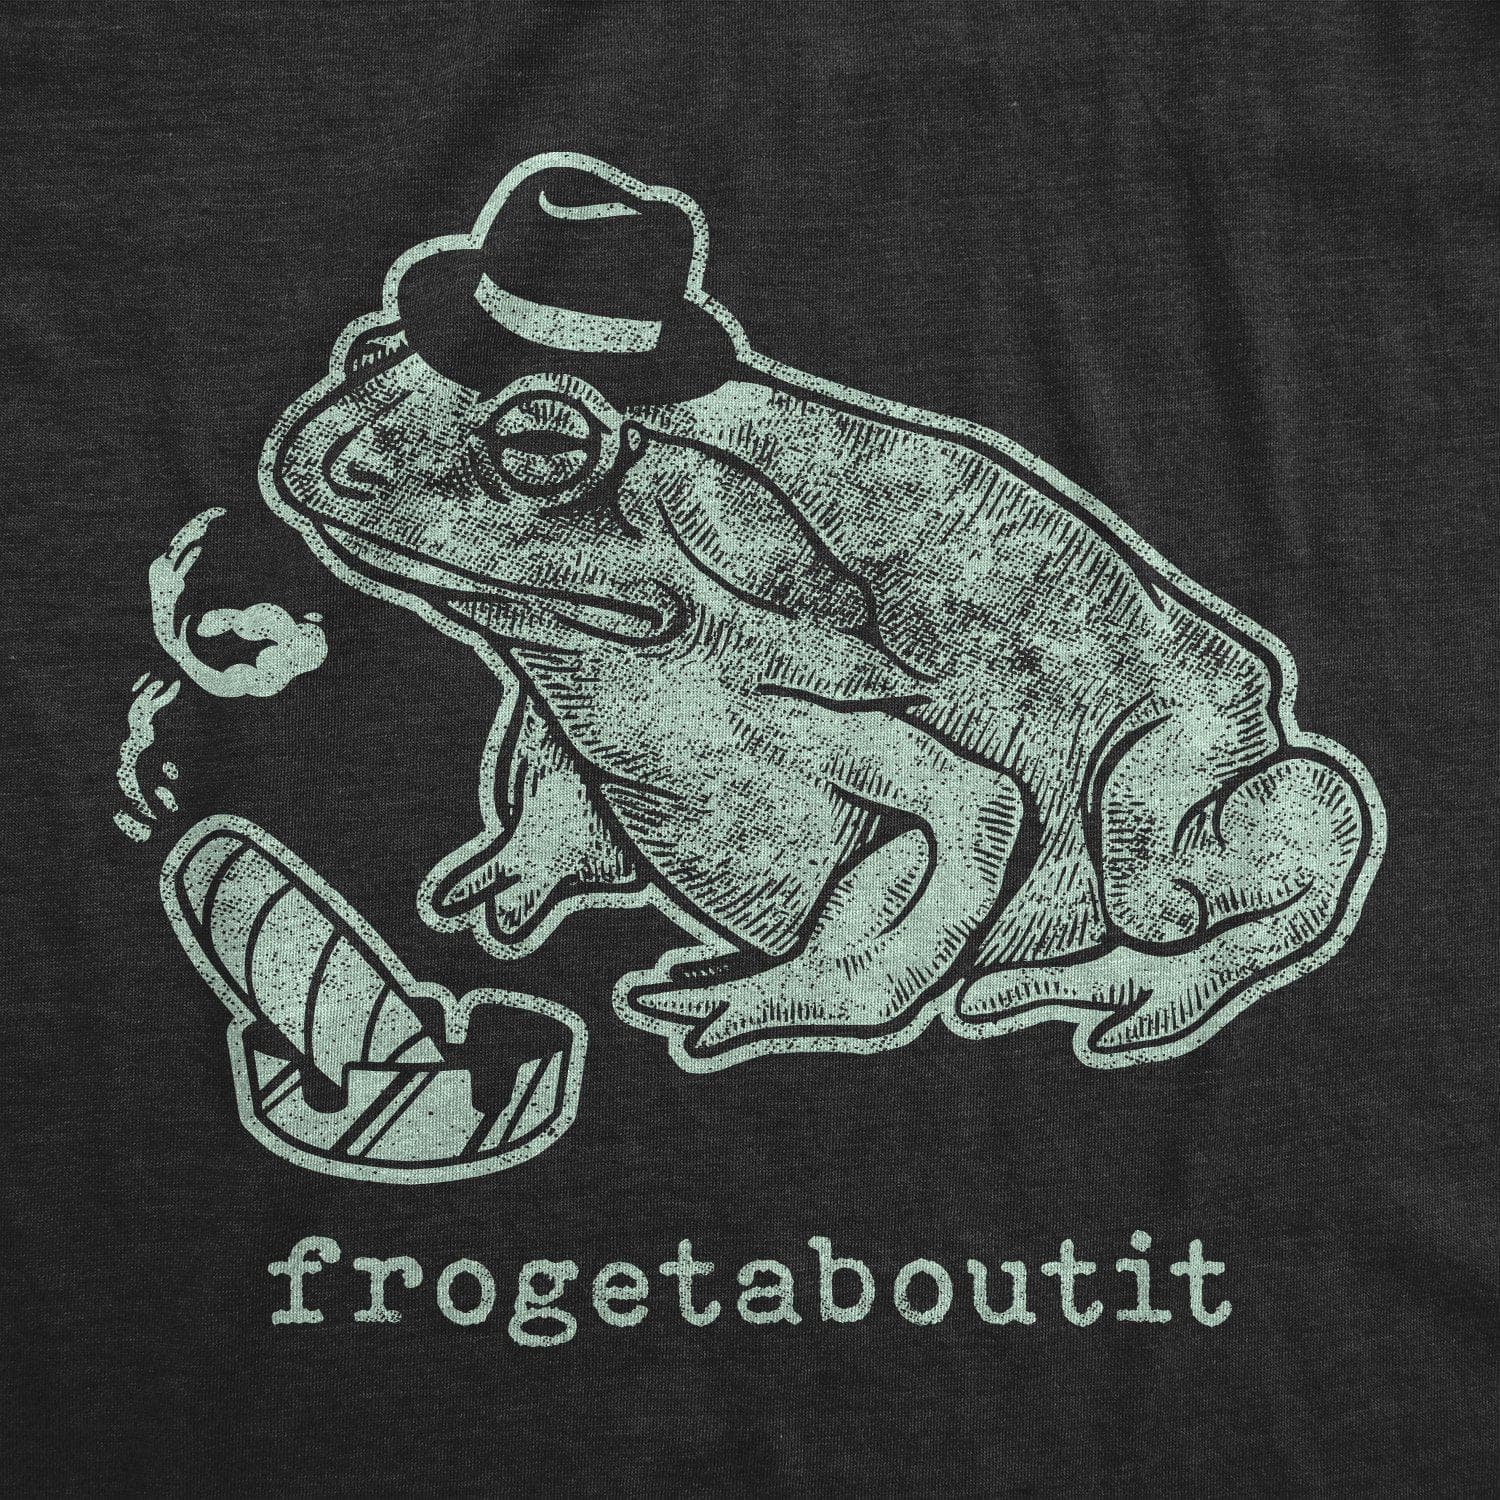 Frogetaboutit Men's Tshirt - Crazy Dog T-Shirts